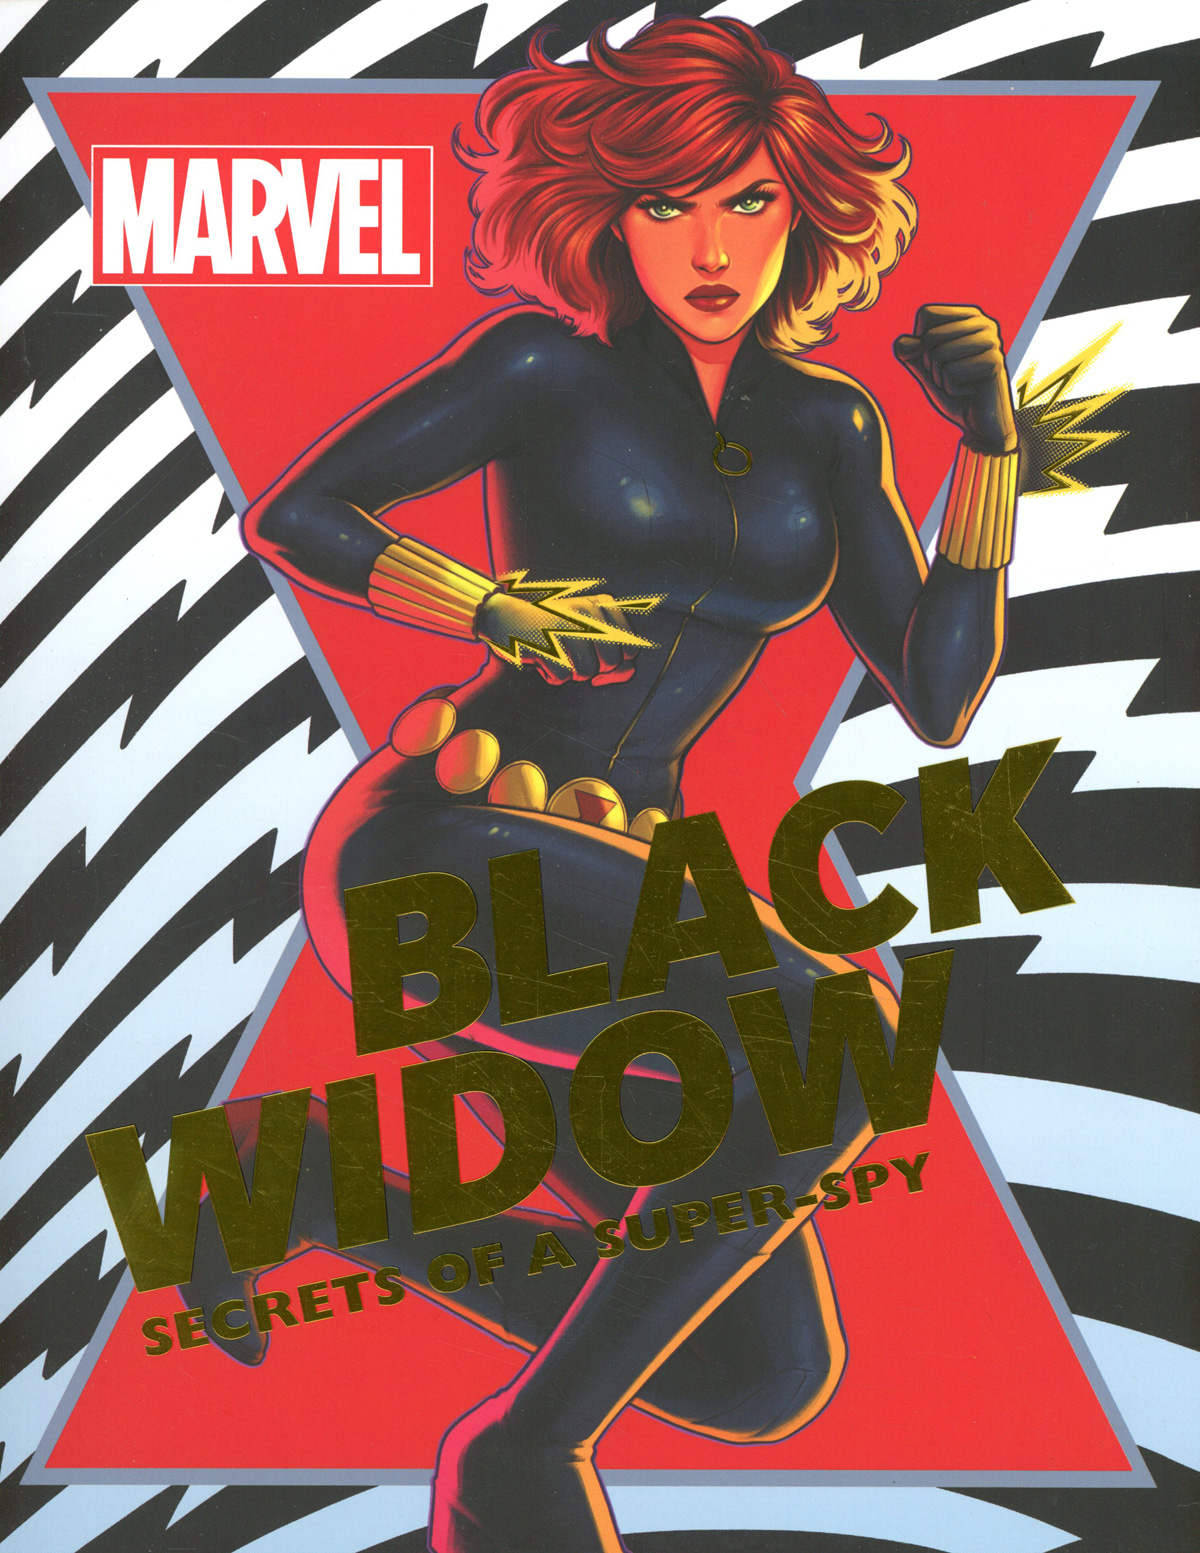 Marvel Black Widow Secrets Of A Super Spy HC